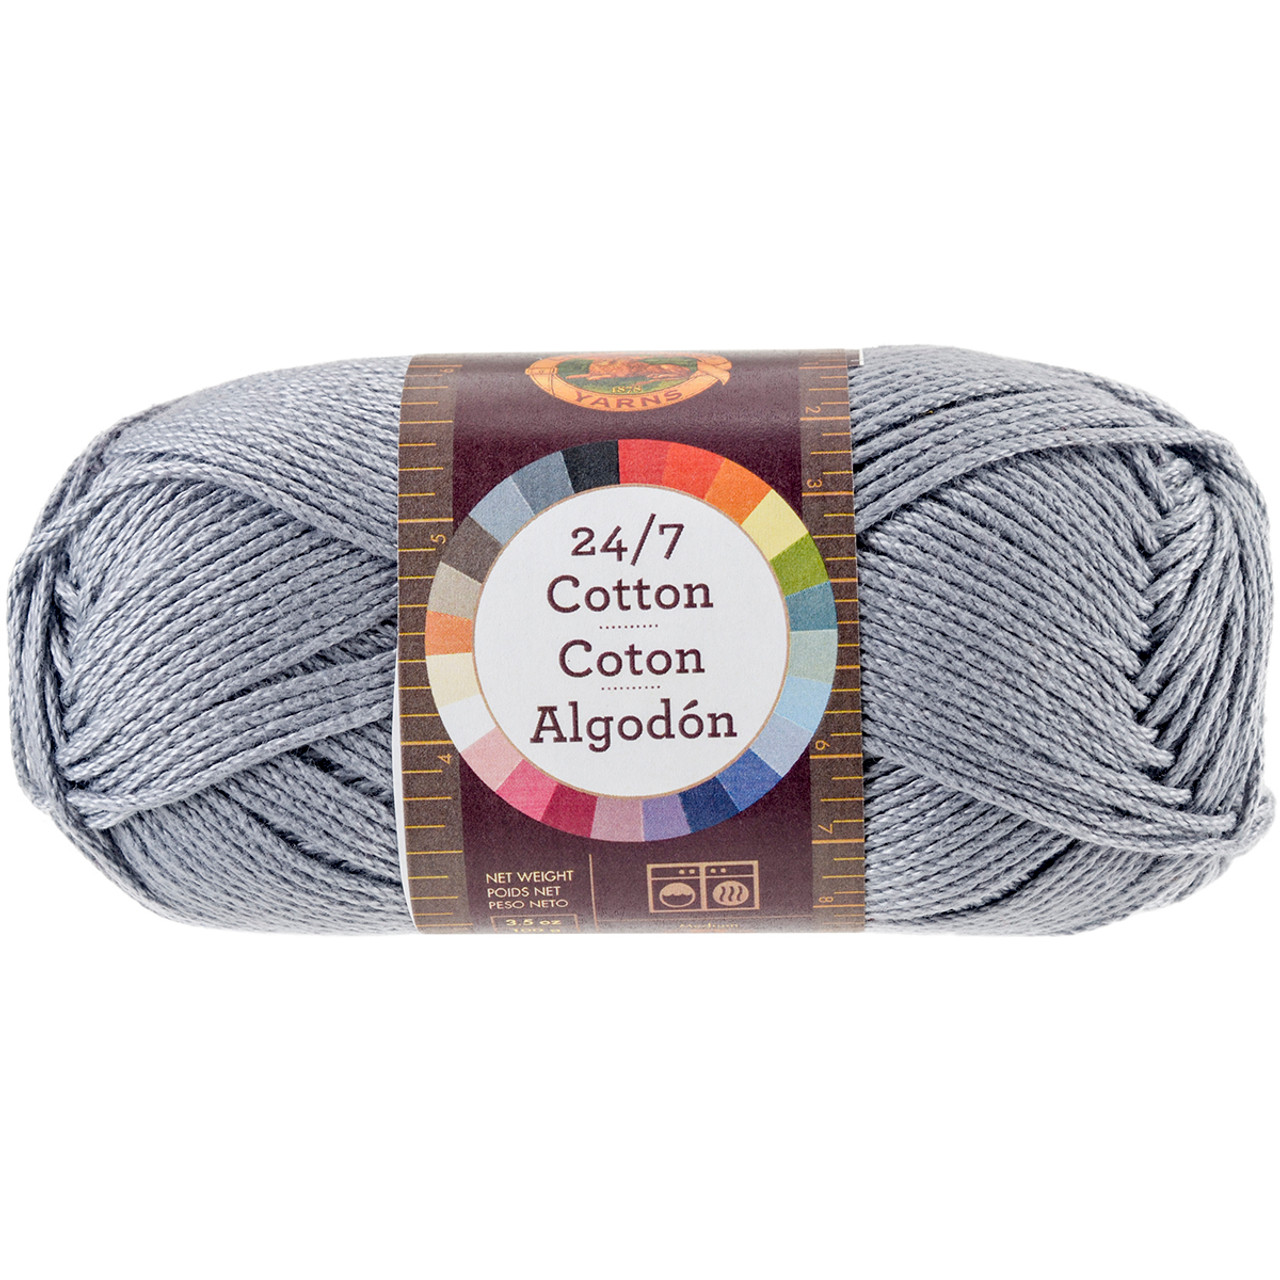 (3-pack) Lion Brand Yarn 761-151 24/7 Cotton Yarn, Cool Grey - Grey